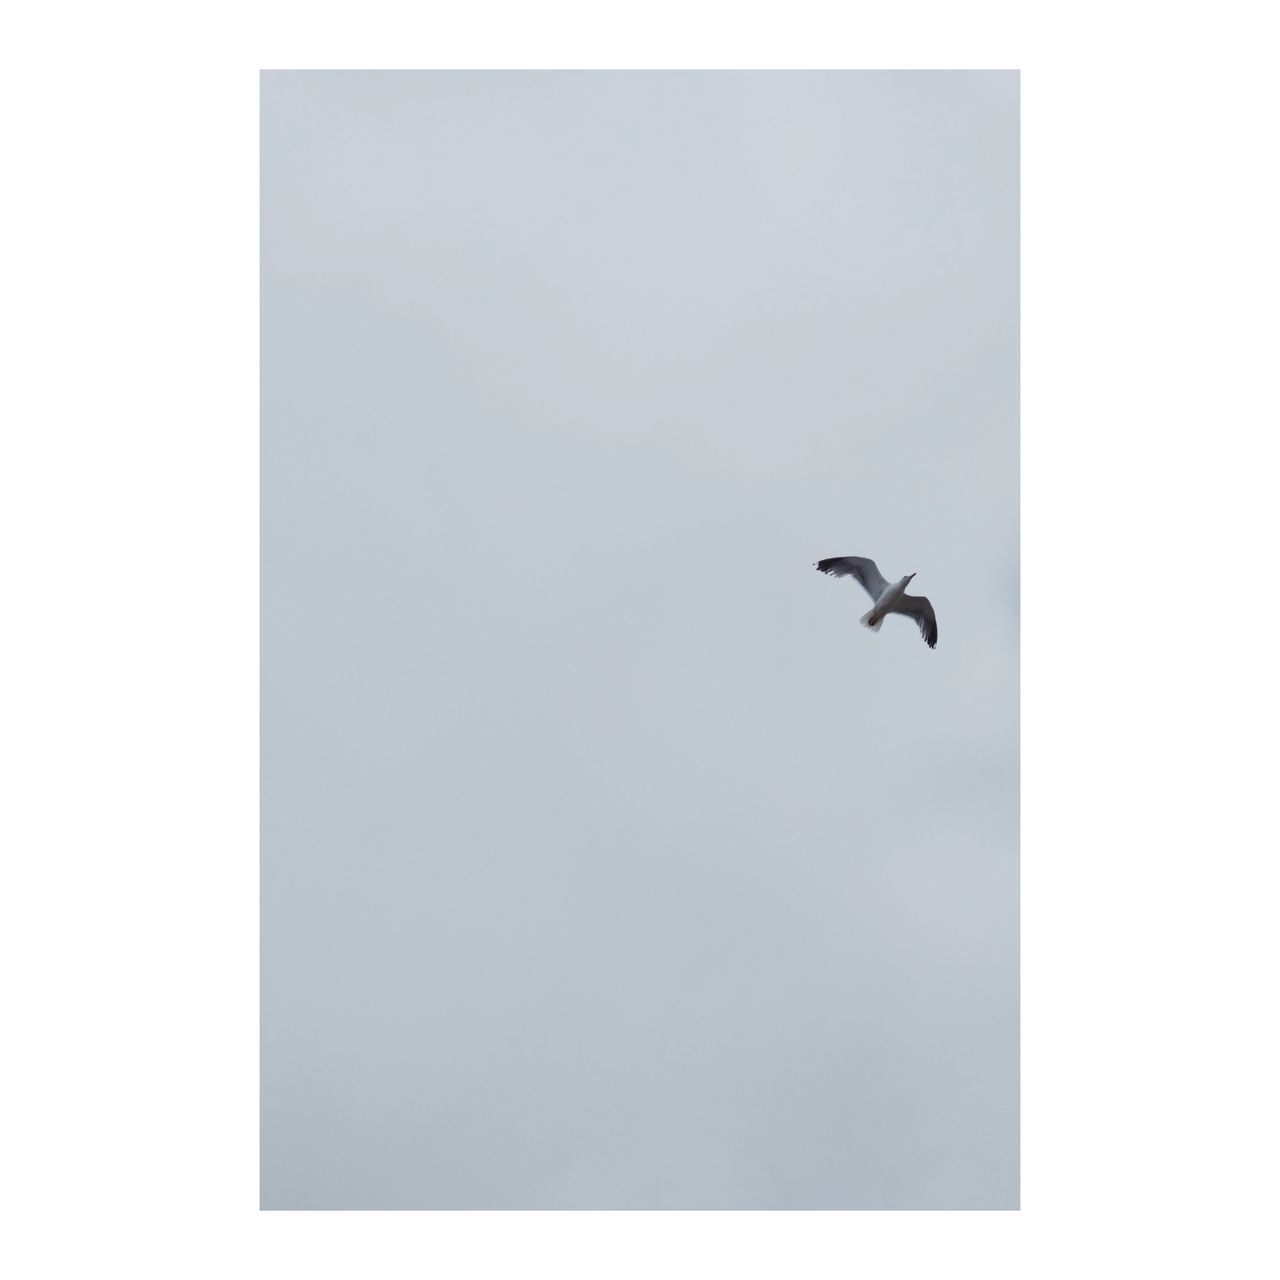 BIRD FLYING IN THE SKY